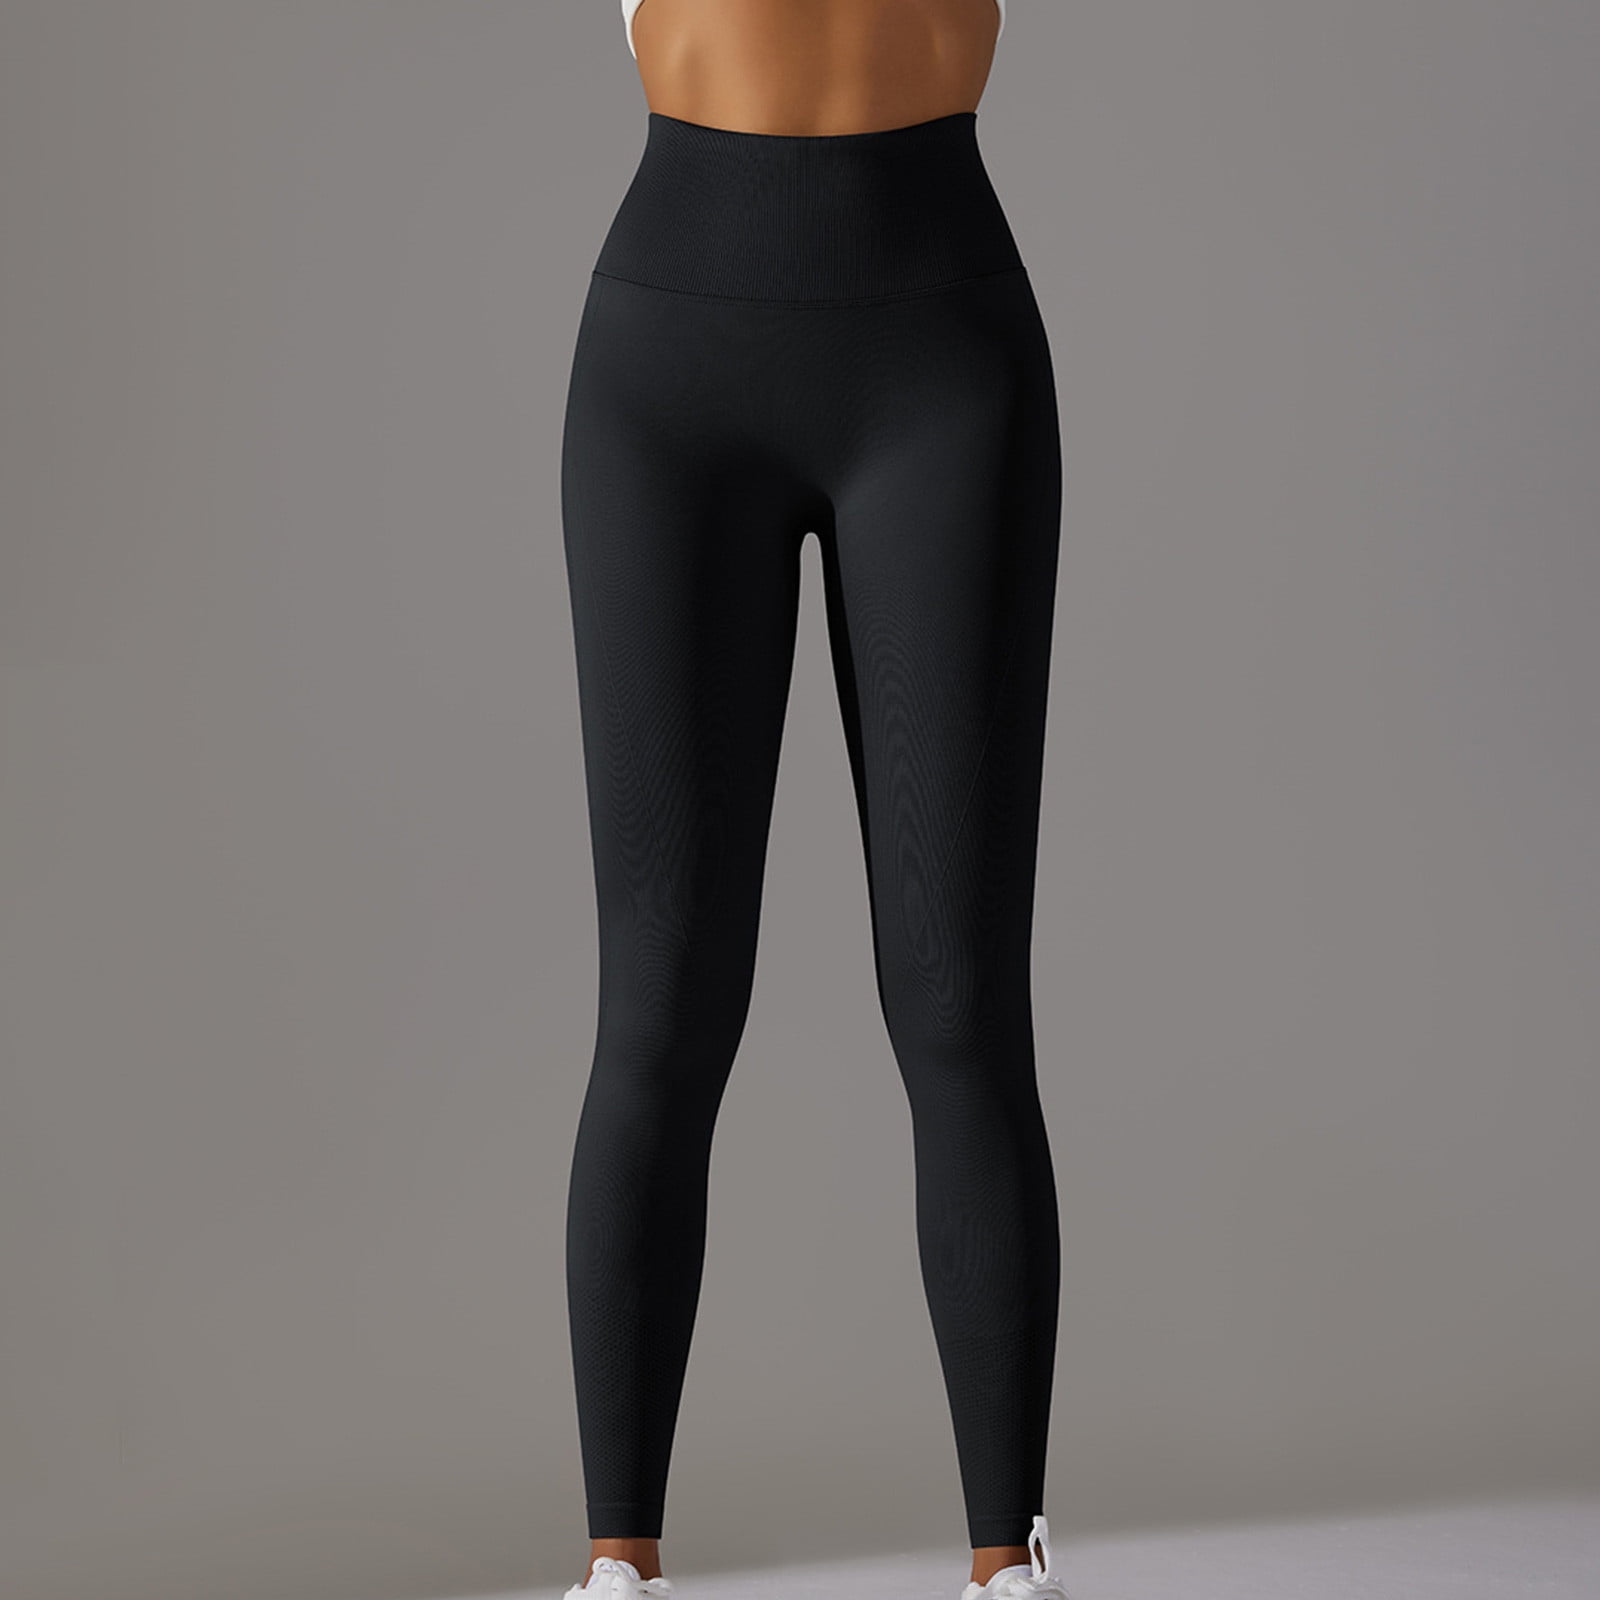 Tdoqot Workout Leggings for Women- Cotton Gym Stretch Tummy Control Butt  Lifting High Rise Seamless Slim Fit Yoga Leggings Black 